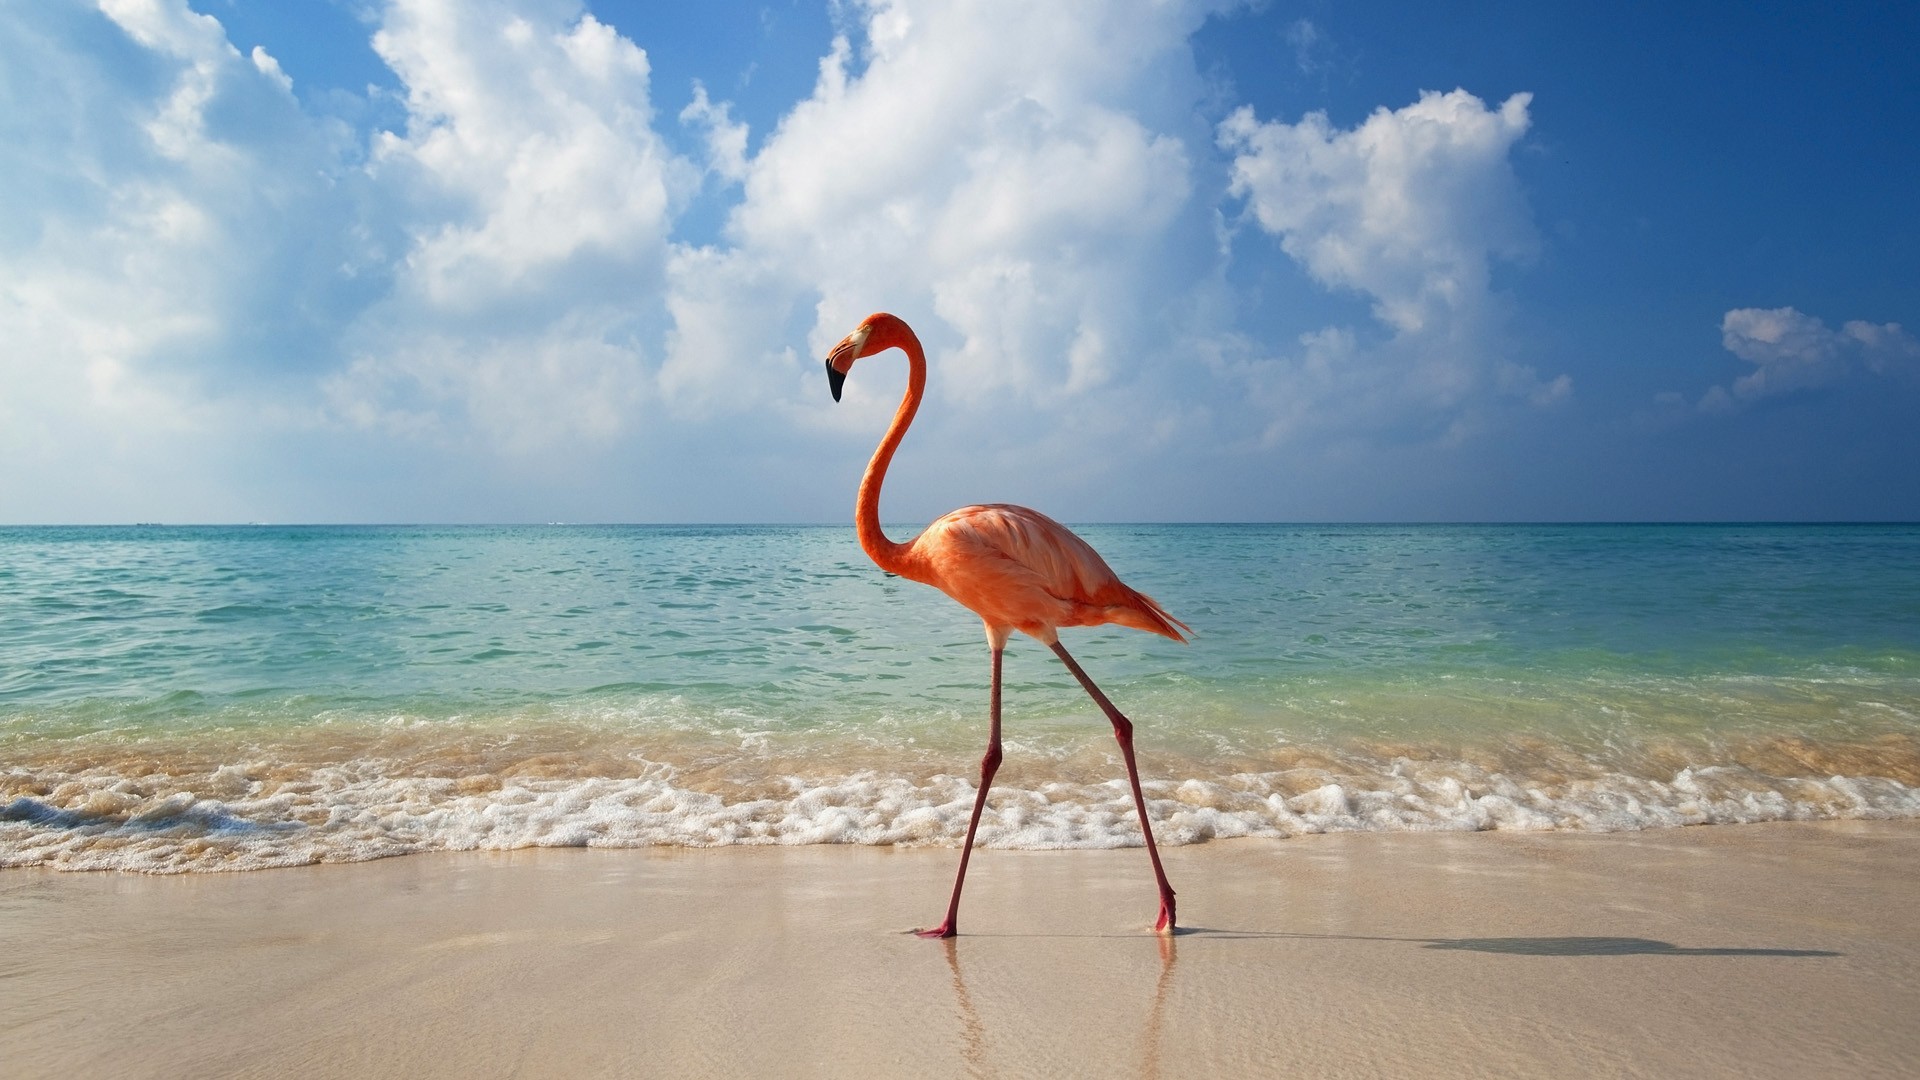 General 1920x1080 animals sea waves flamingos beach birds sunlight sand horizon orange walking turquoise nature